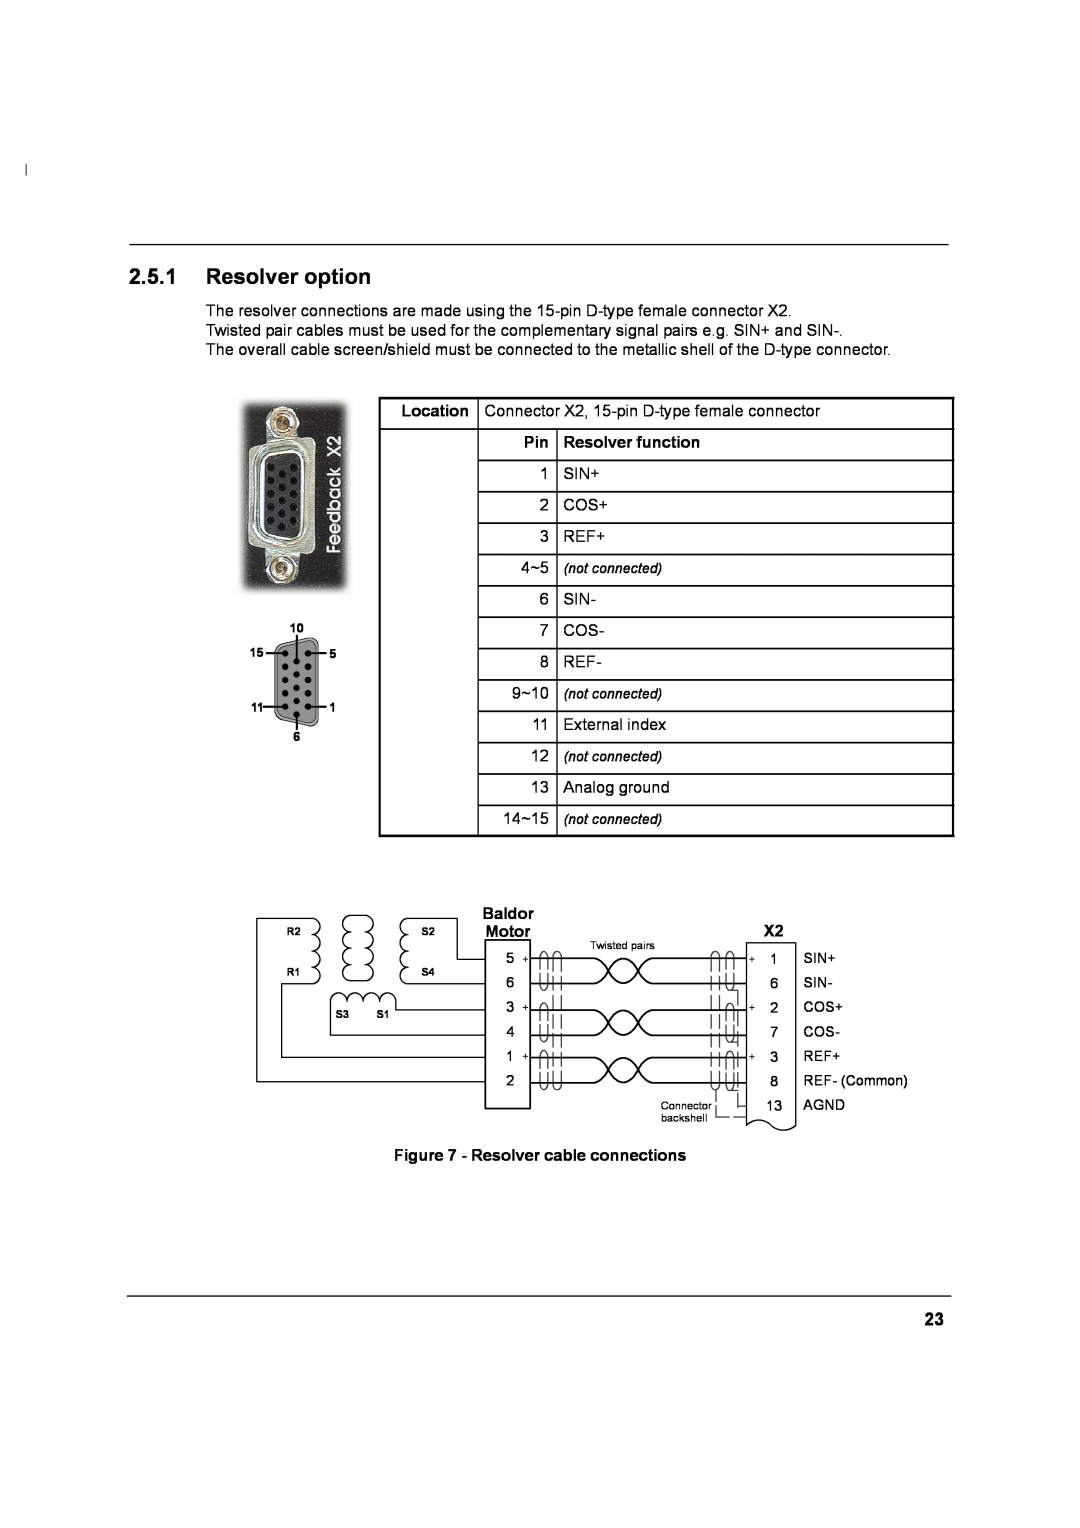 Baldor MN1274 06/2001 installation manual Resolver option, Resolver function, Baldor, Motor, Resolver cable connections 